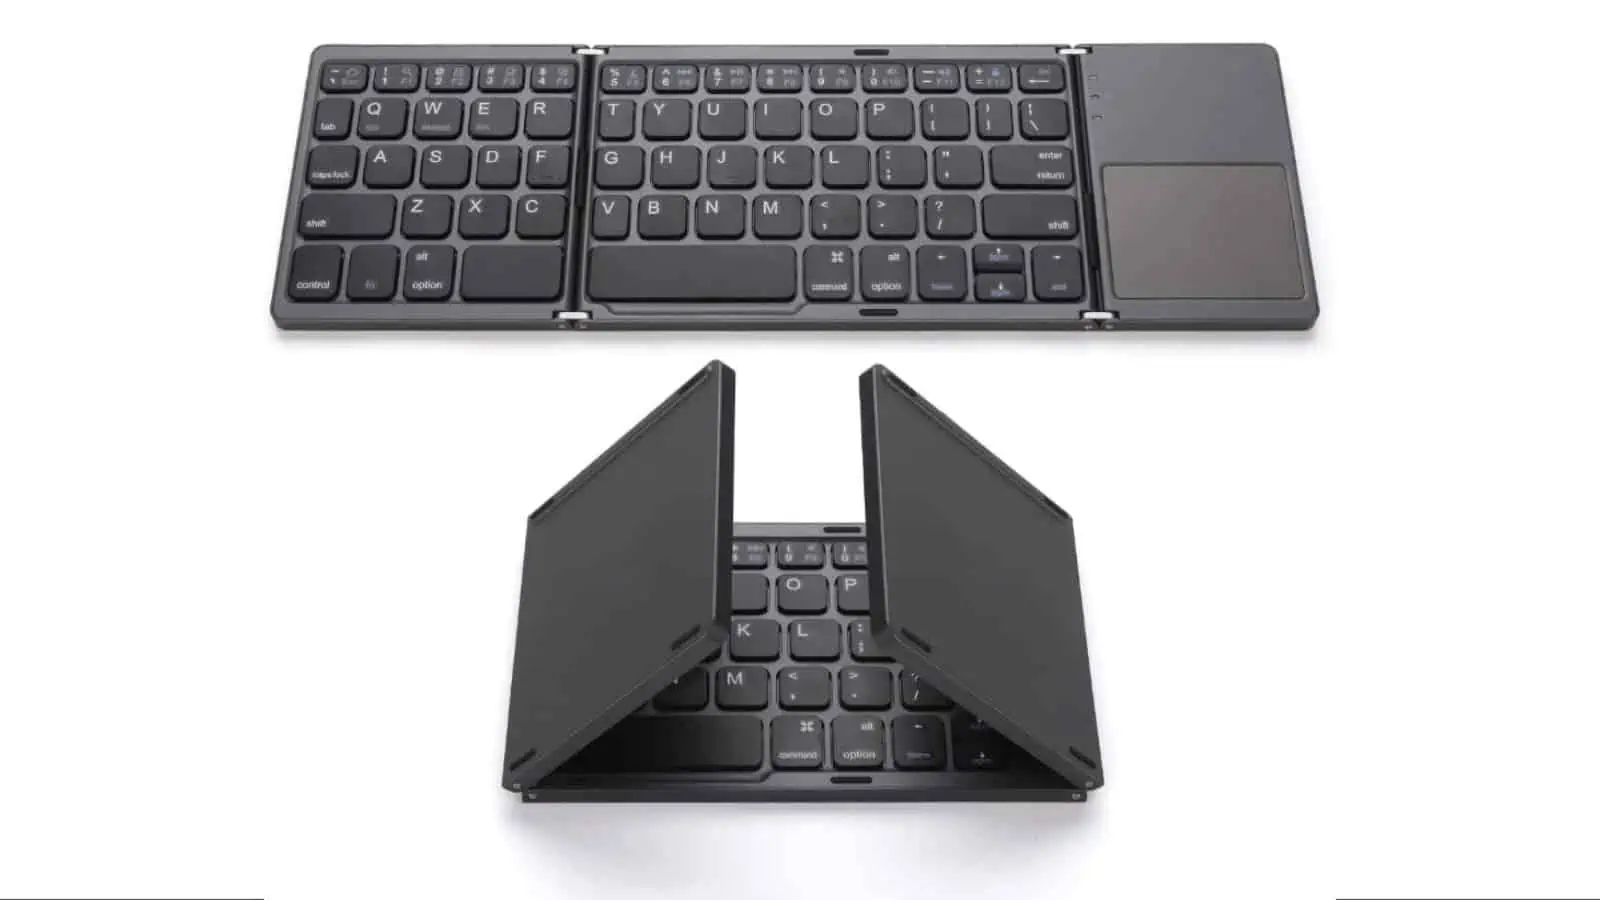 Gimibox Foldable Bluetooth Keyboard